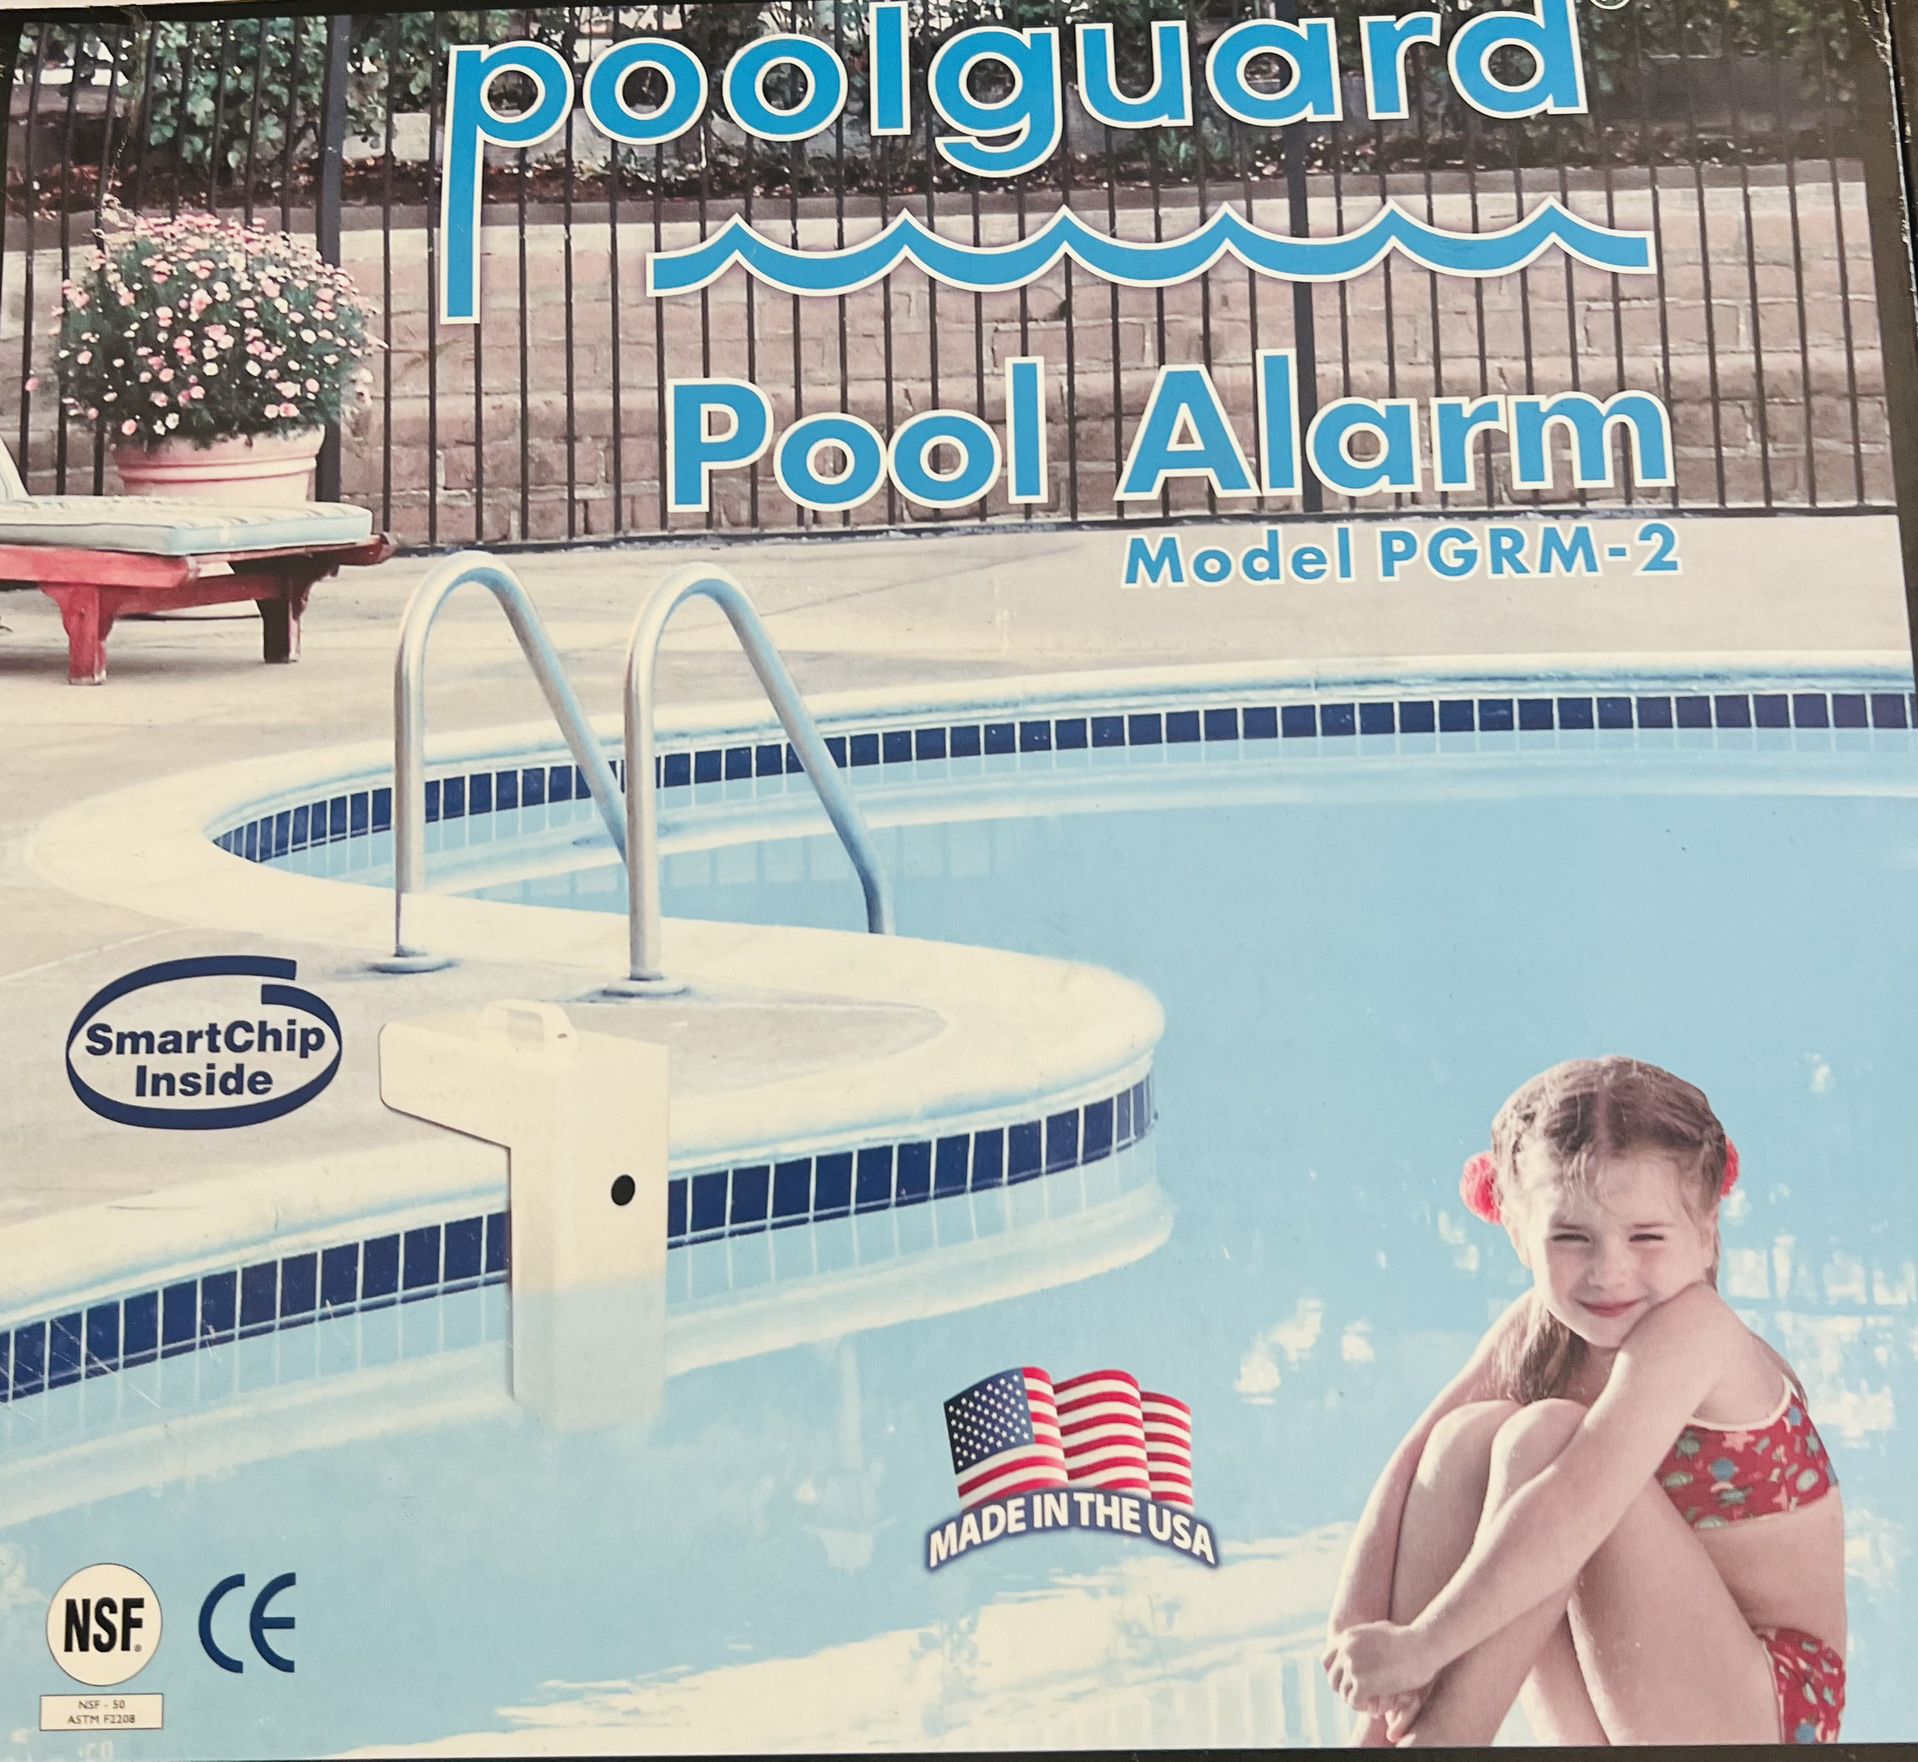 2 Poolguard Pool Alarms- Model PGRM-2